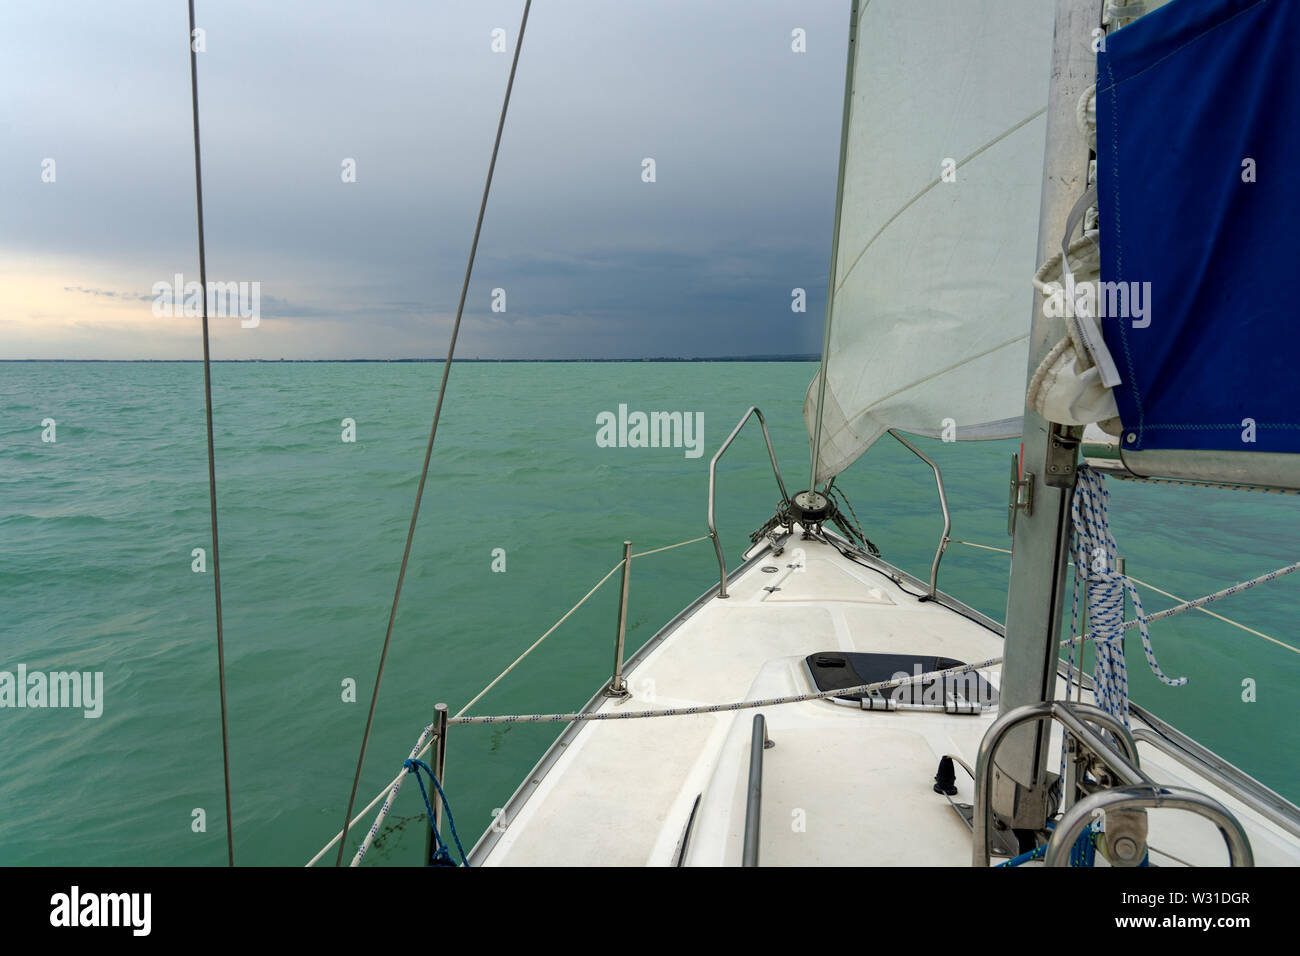 Sailboat on the lake Balaton ship prow view Stock Photo